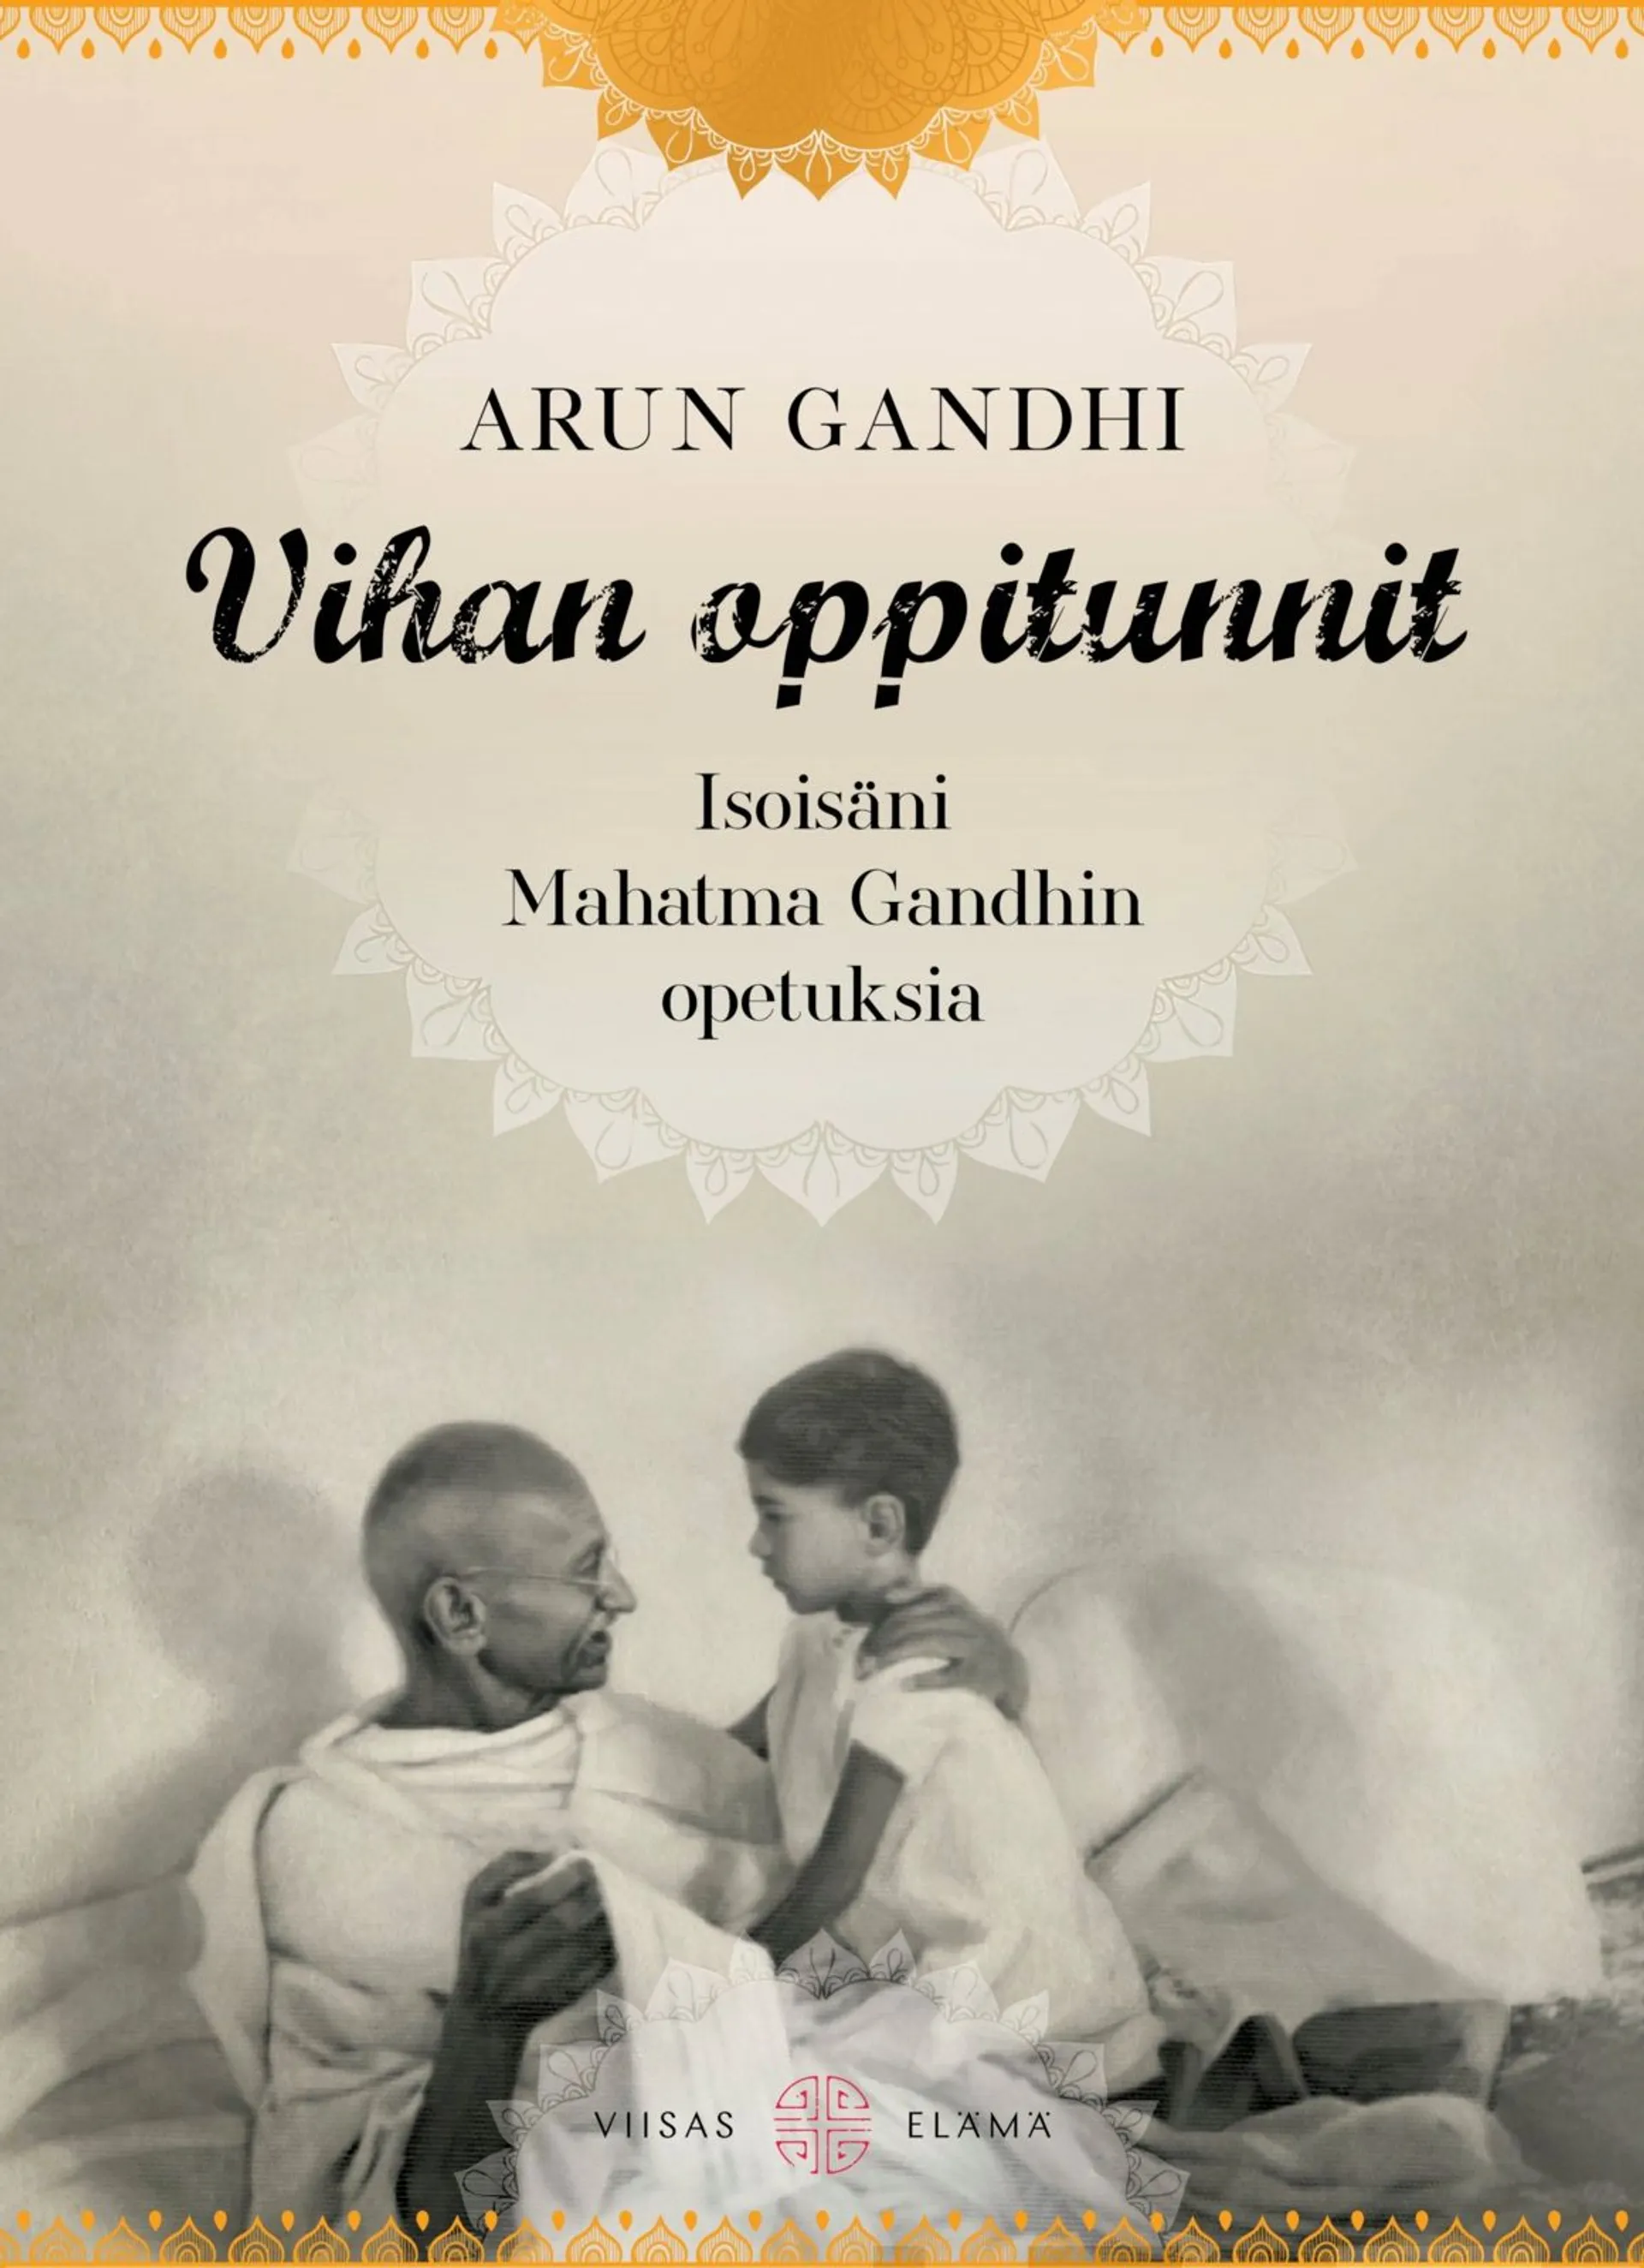 Gandhi, Vihan oppitunnit